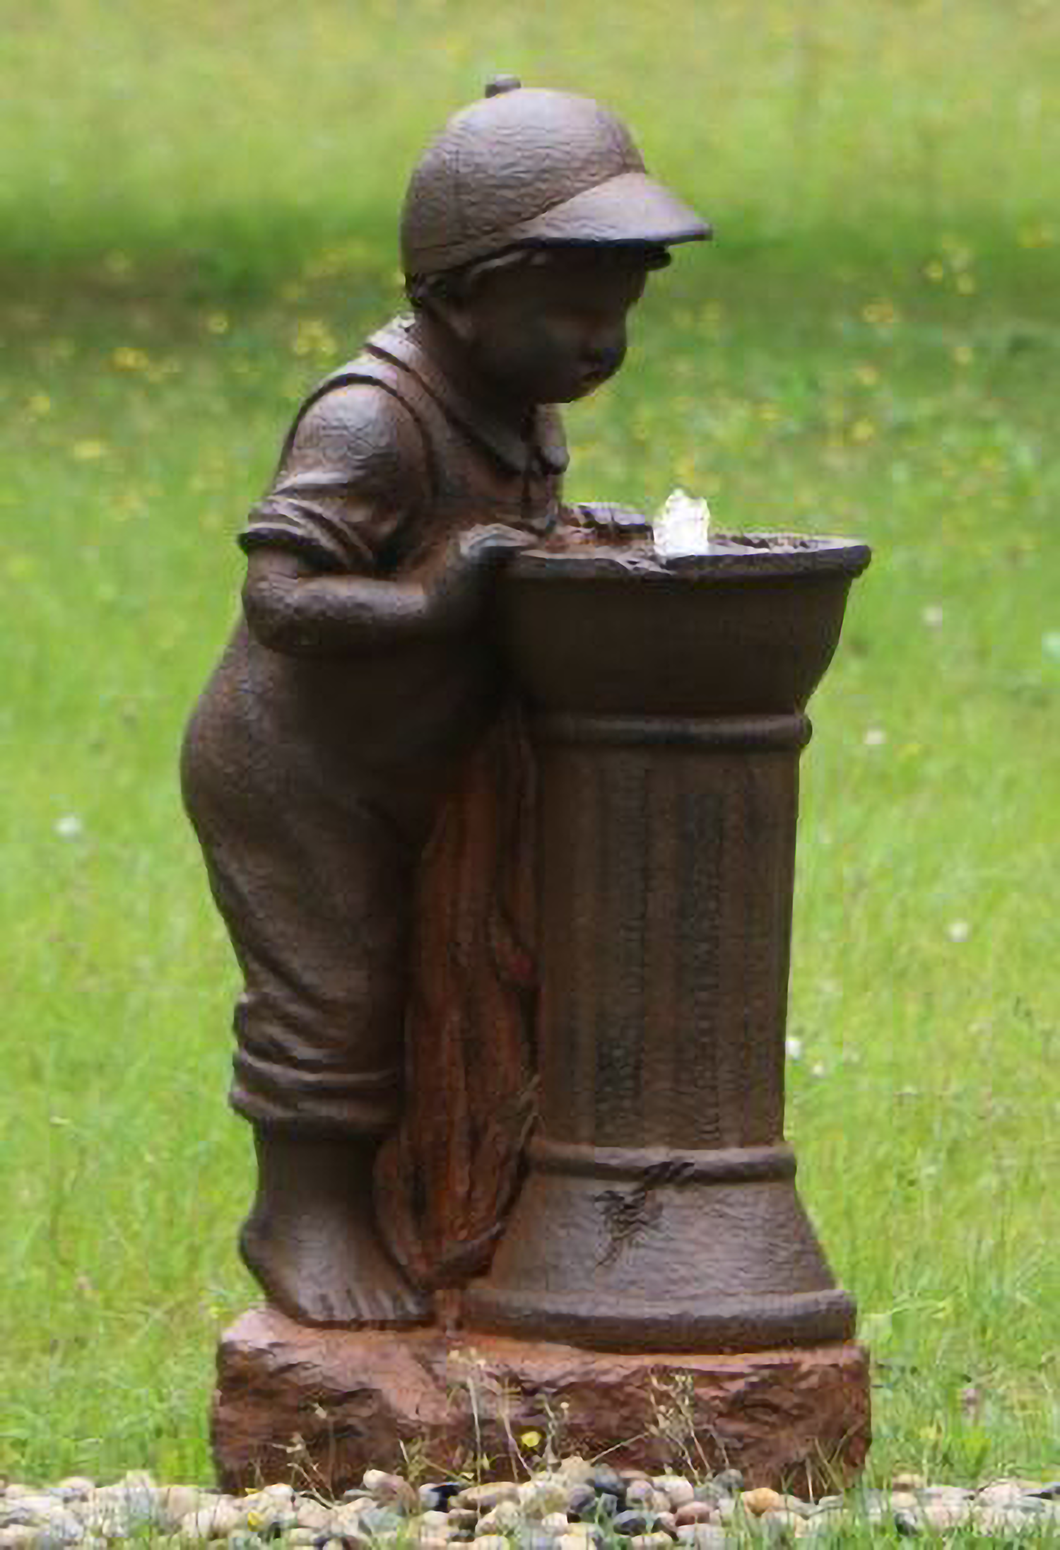 Boy at Water Fountain in garden setting